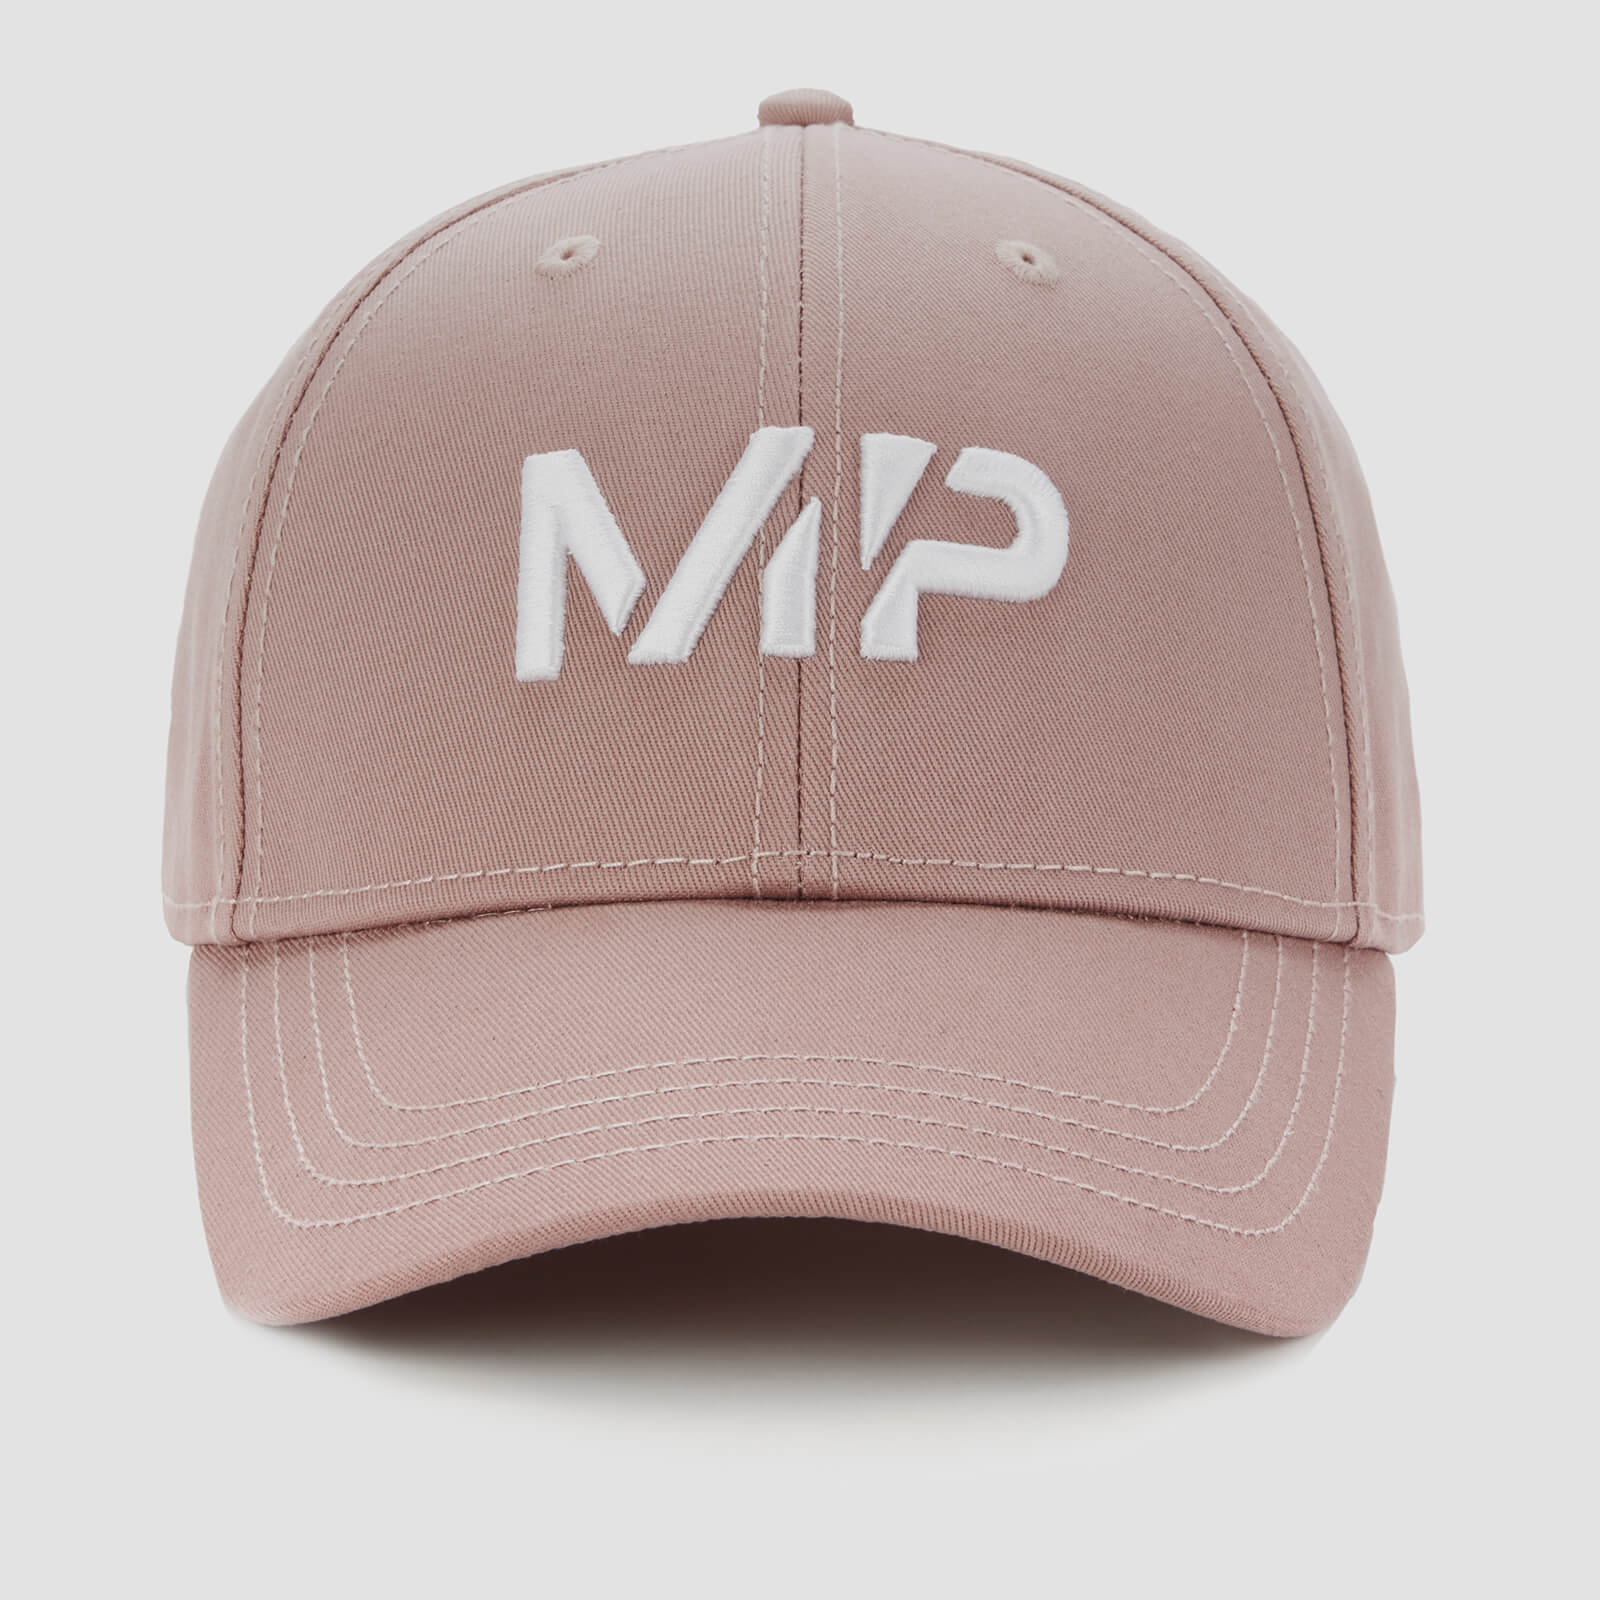 MP Baseball Cap - Fawn